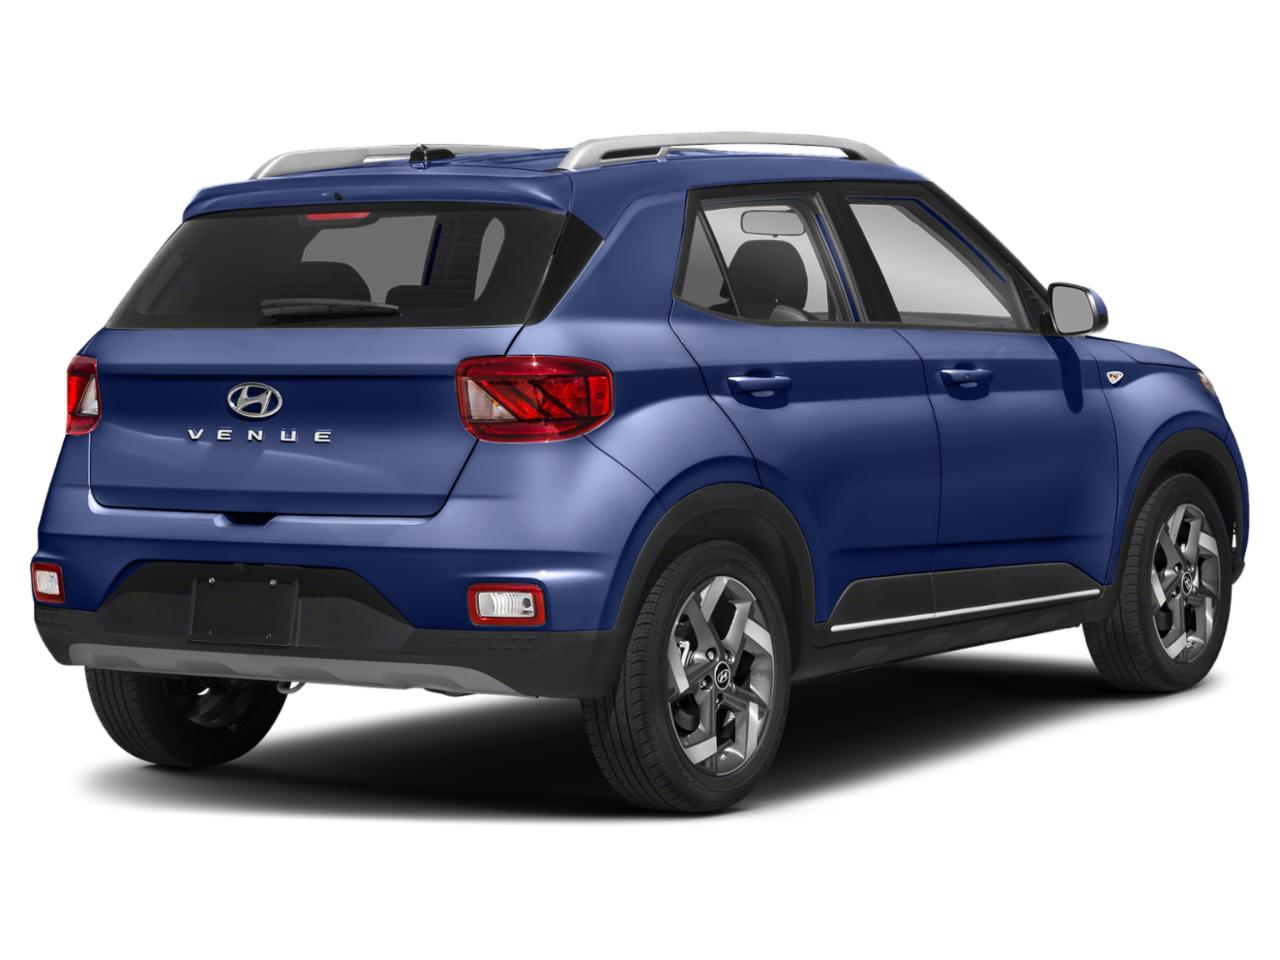 SOLD 2019 Hyundai Venue Go | Used SUV | Hoppers Crossing VIC